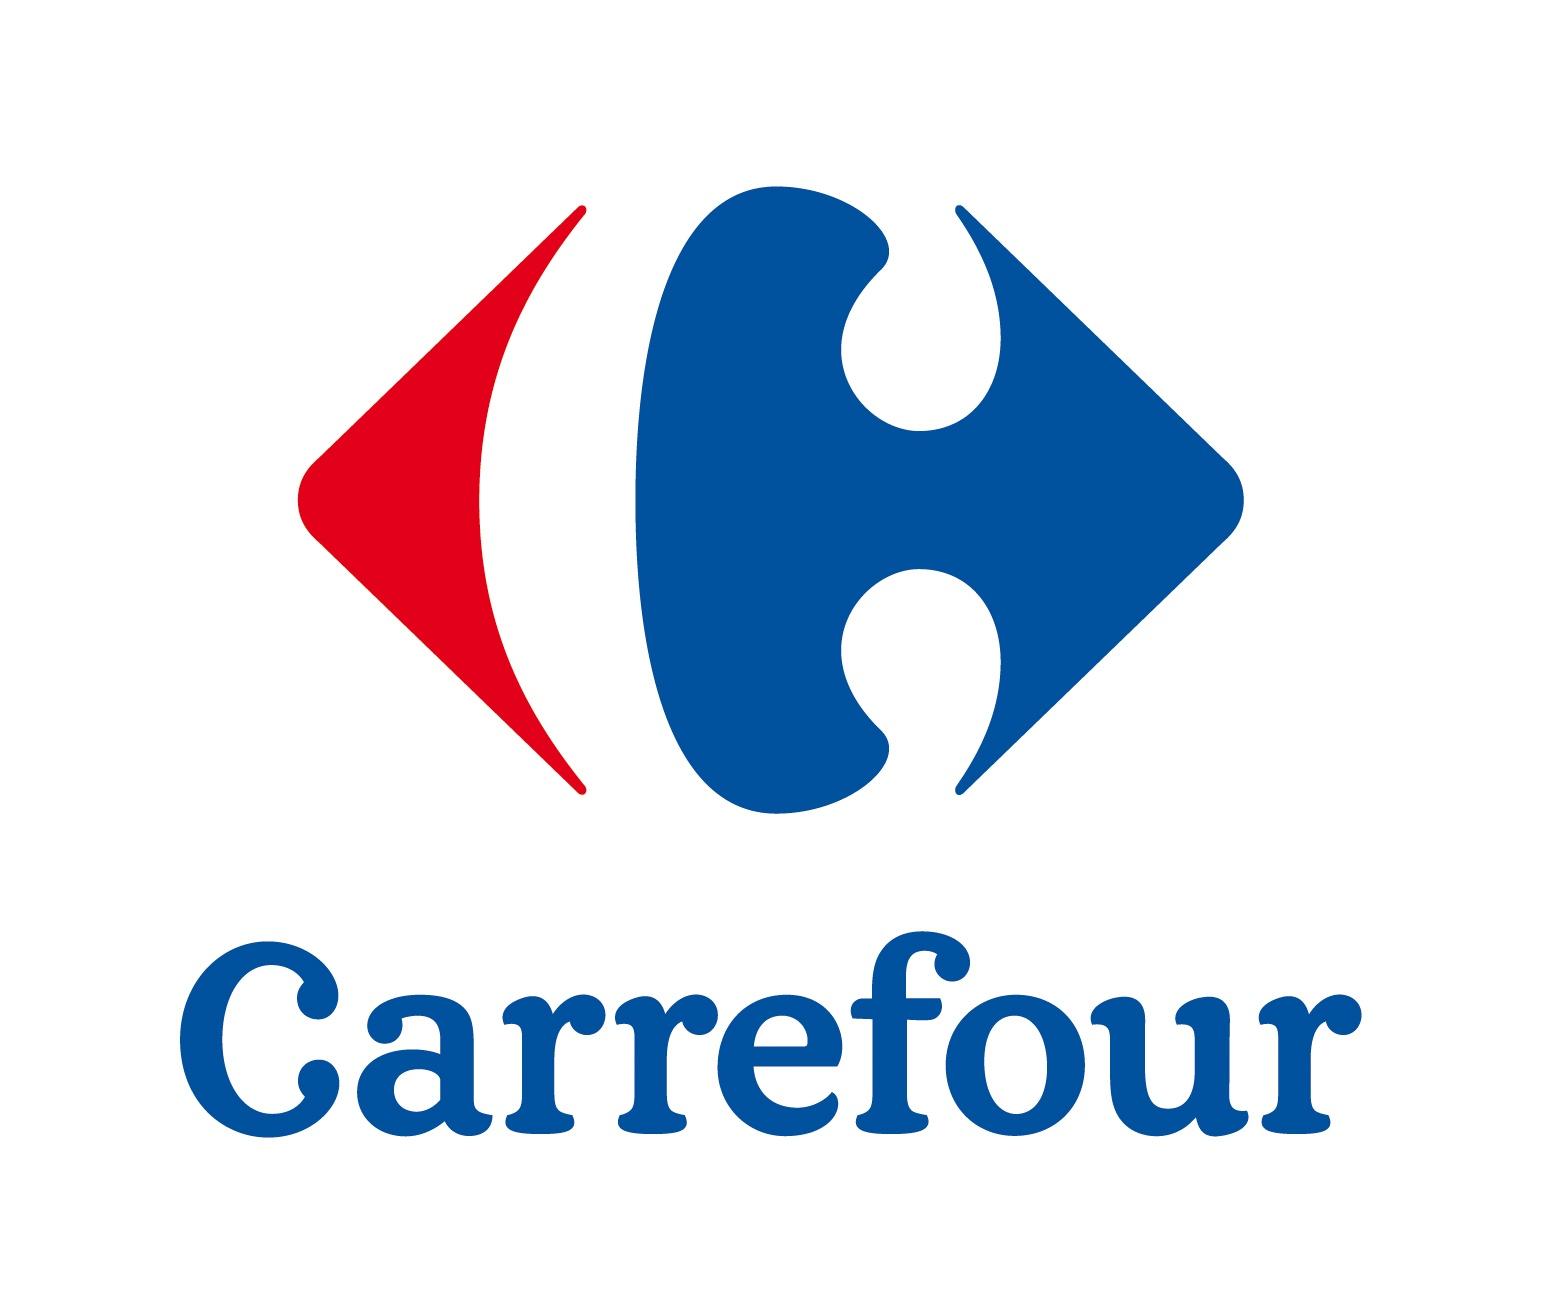 Carrefour Montesson